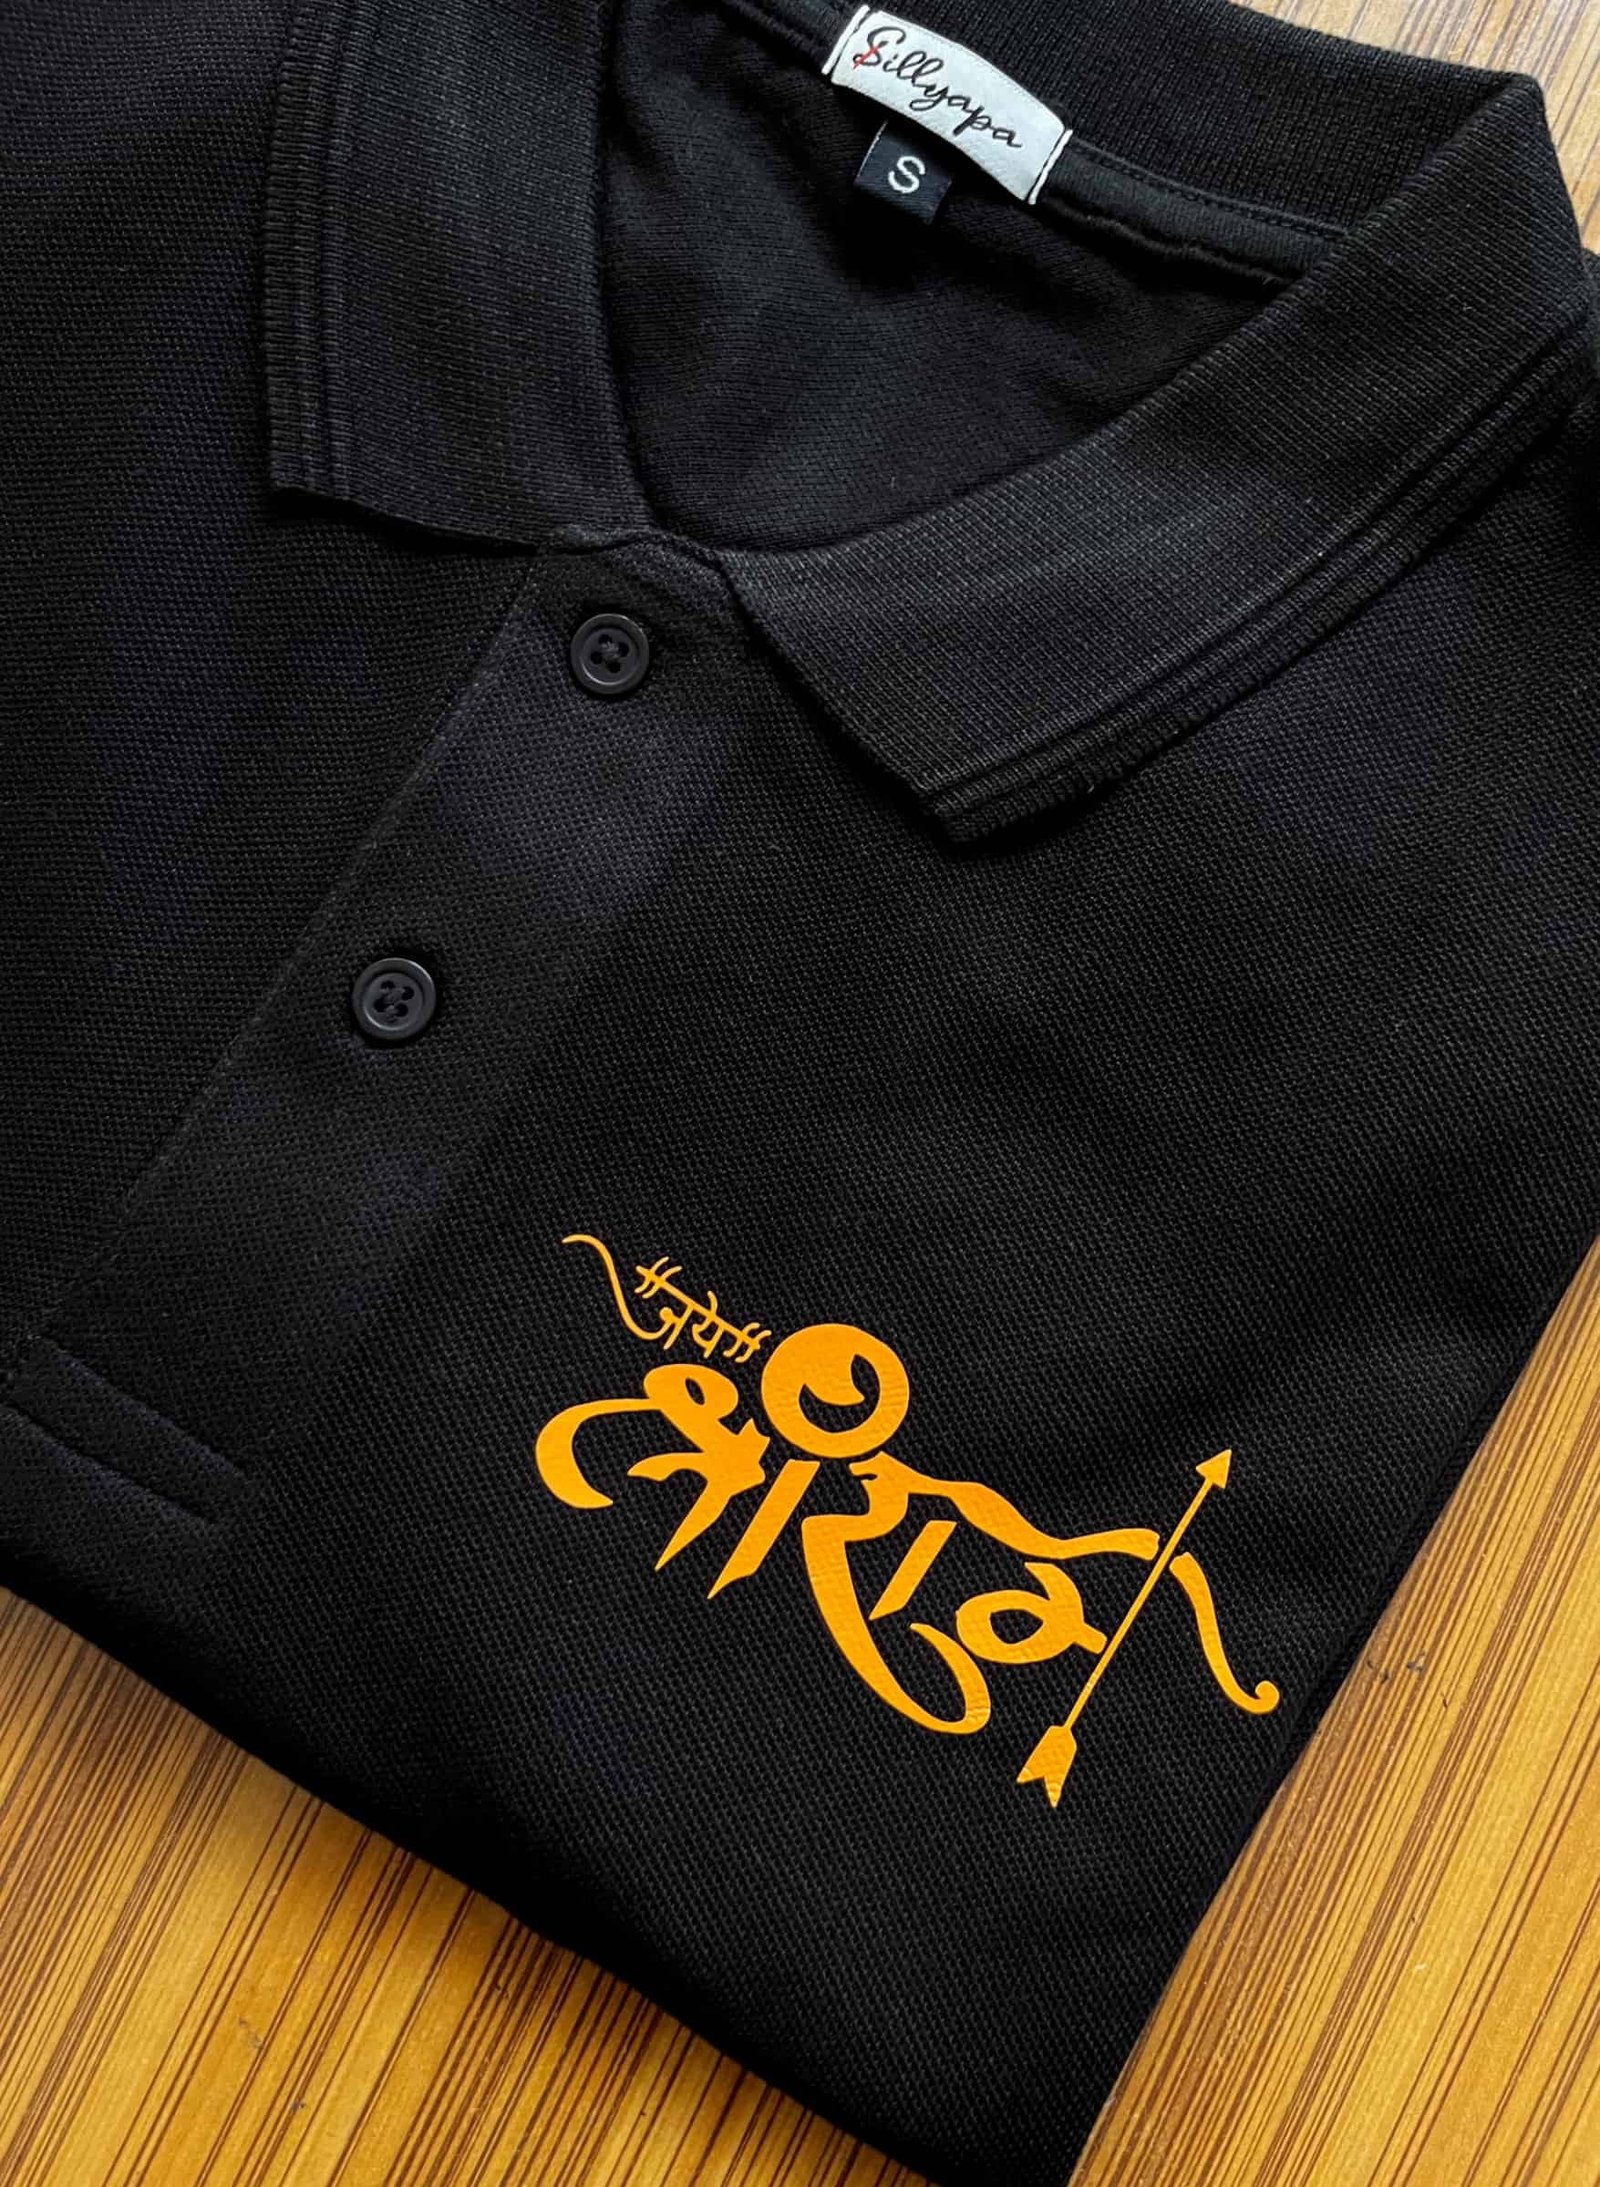 Shree Ram Vector Design Images, Jai Shree Ram Hindi Calligraphy With Hindu  Religion Flag, Shree Ram, Jai Shree Ram, Hindi Calligraphy PNG Image For  Free Download